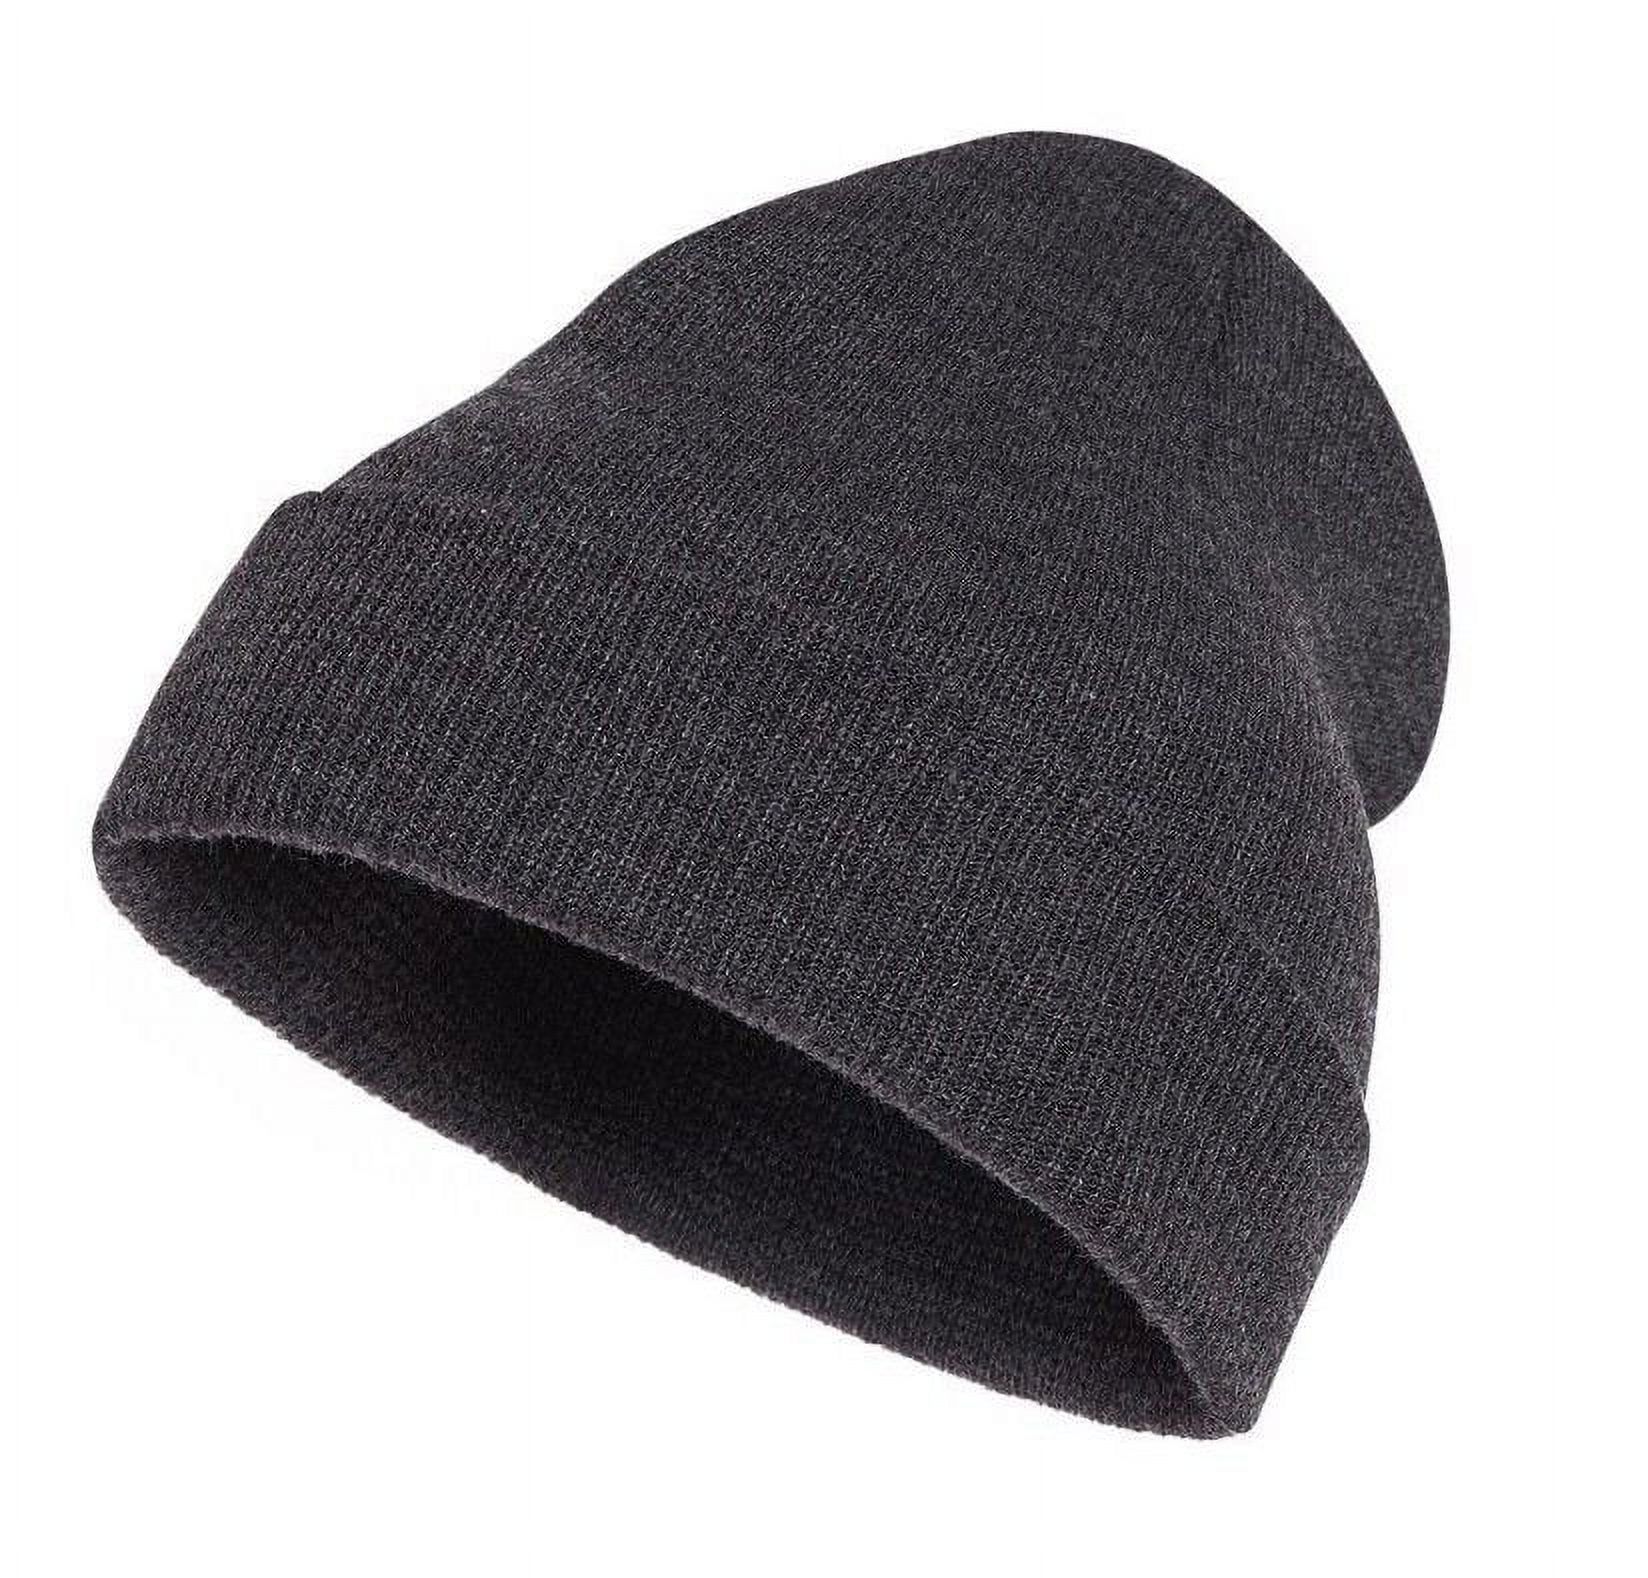 SET OF 4 BEANIE Warm Winter Beanies Hats Cap Toboggans Thermal Knit Cuff Acrylic Ski hats 12" (Navy+Black+Gray+Camo) - image 2 of 5